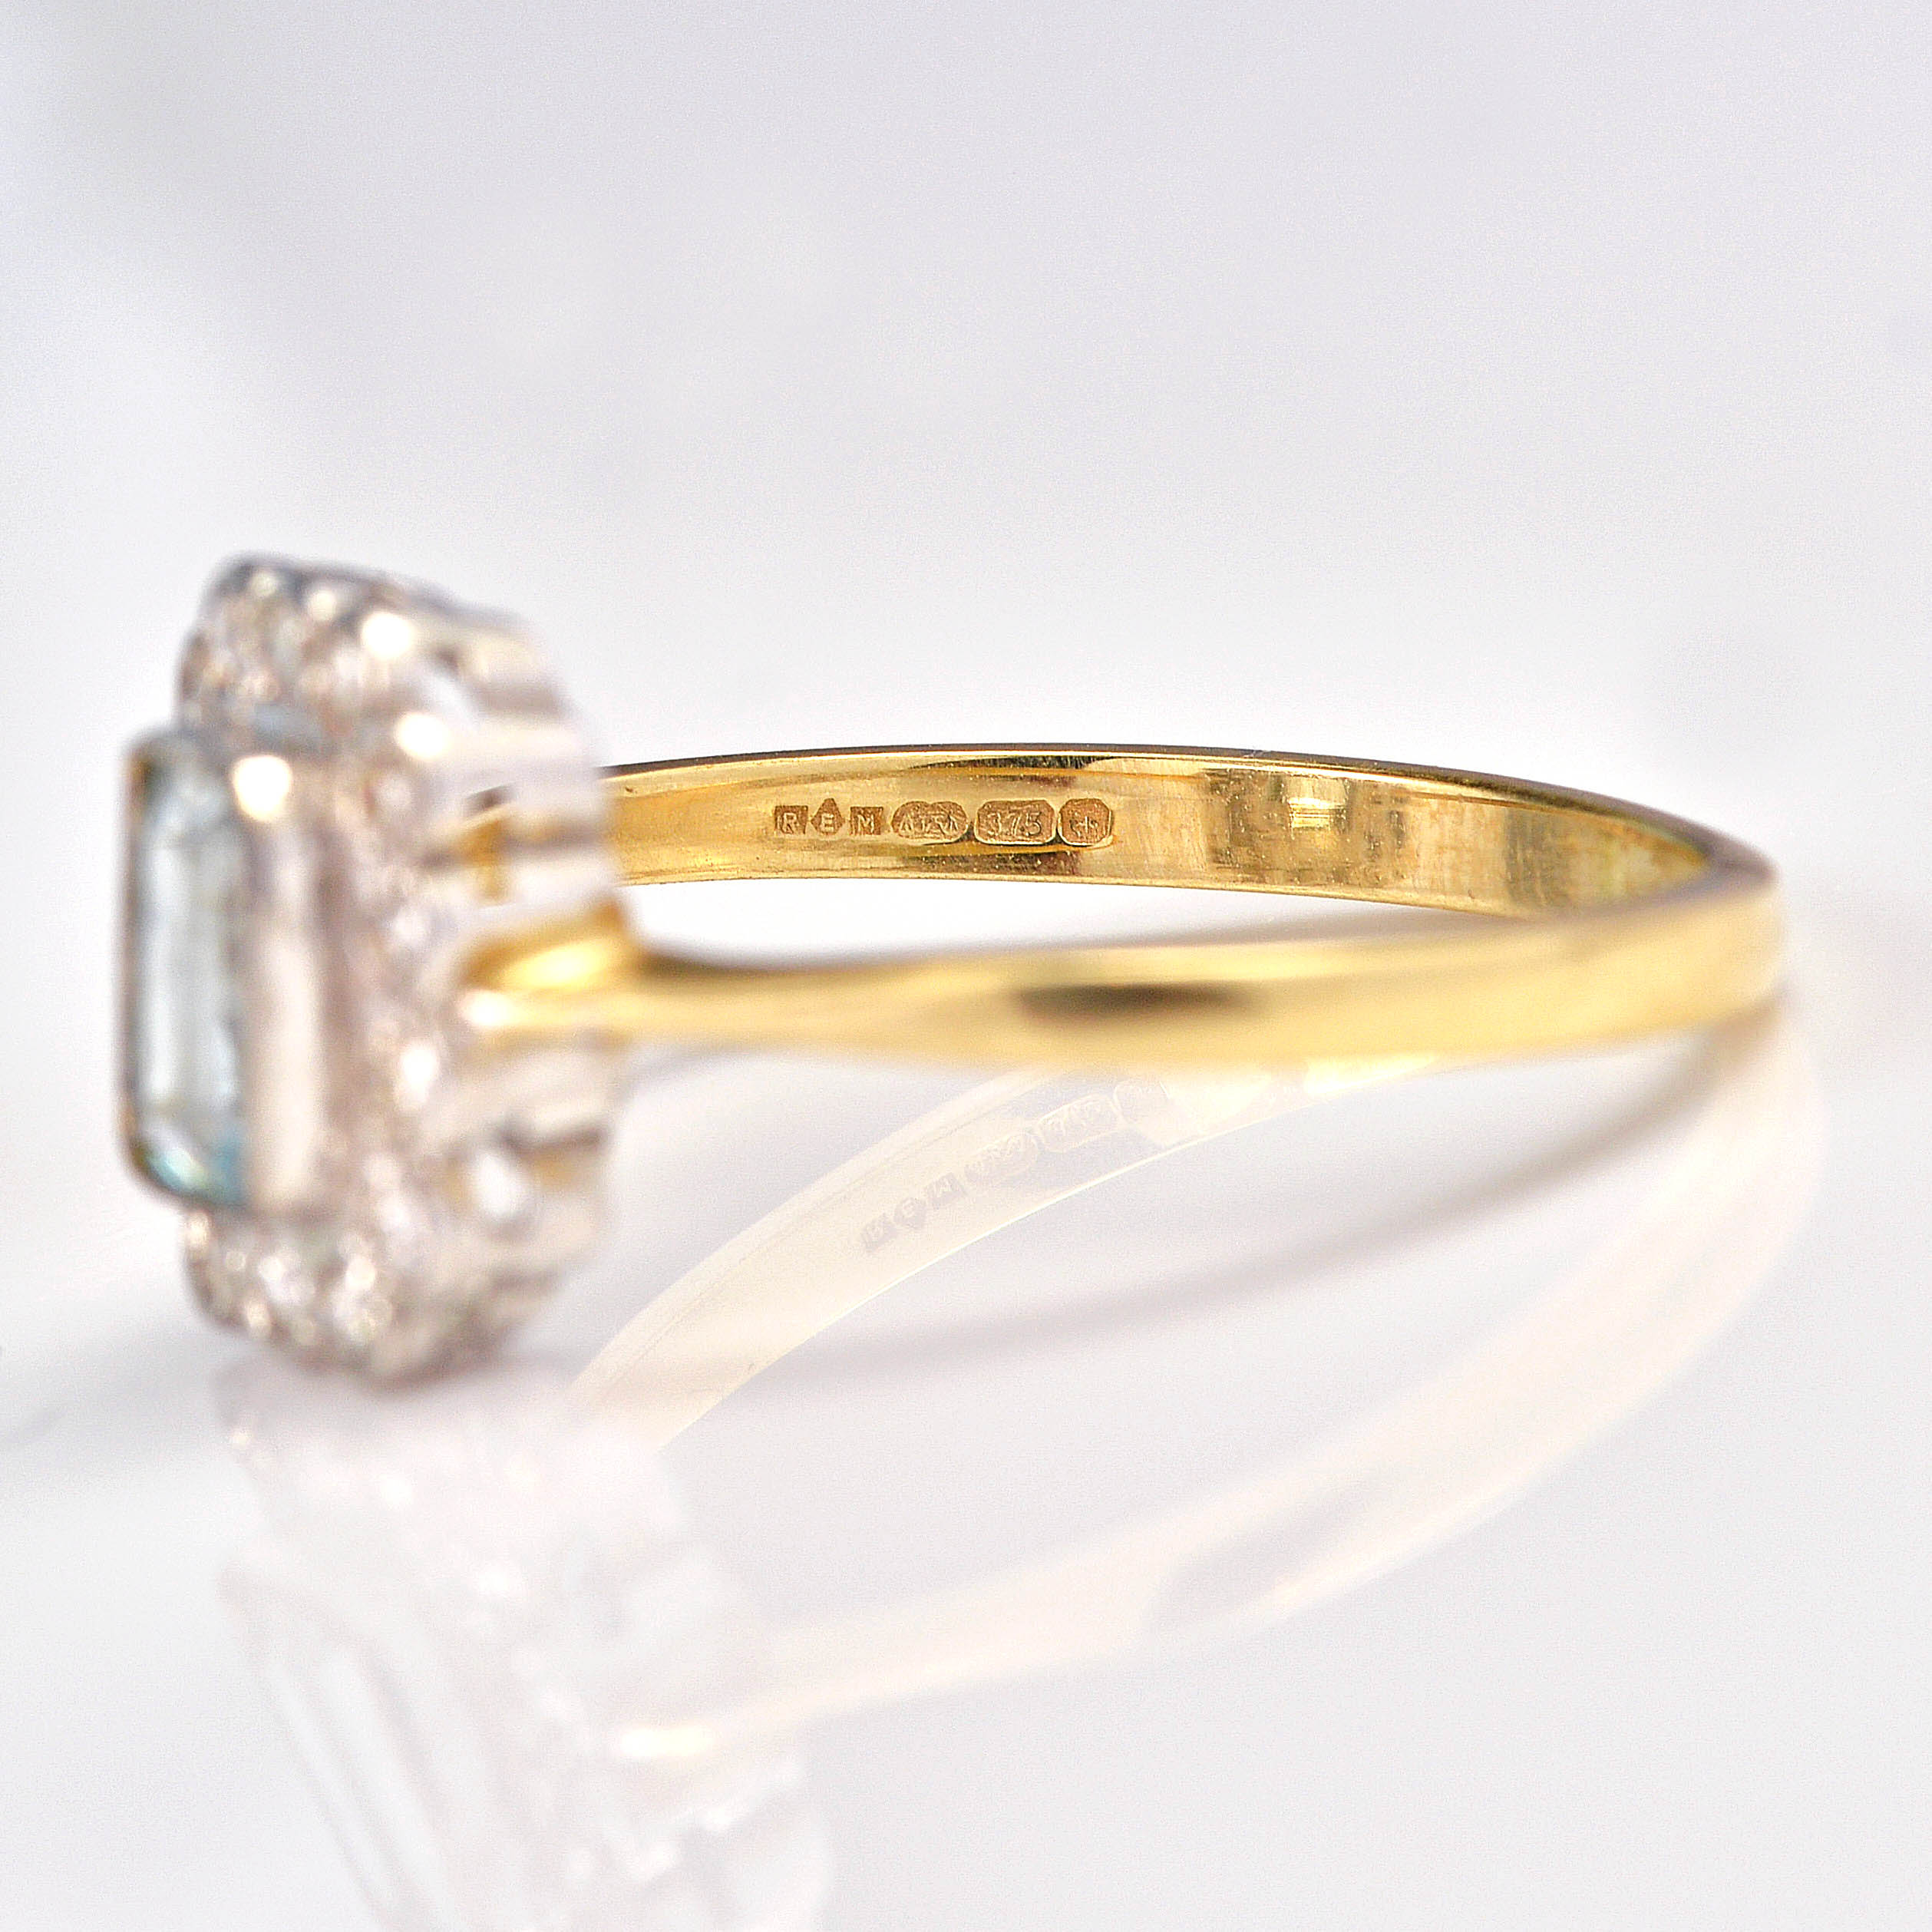 Ellibelle Jewellery Art Deco Style Topaz & Diamond 9ct Gold Panel Ring